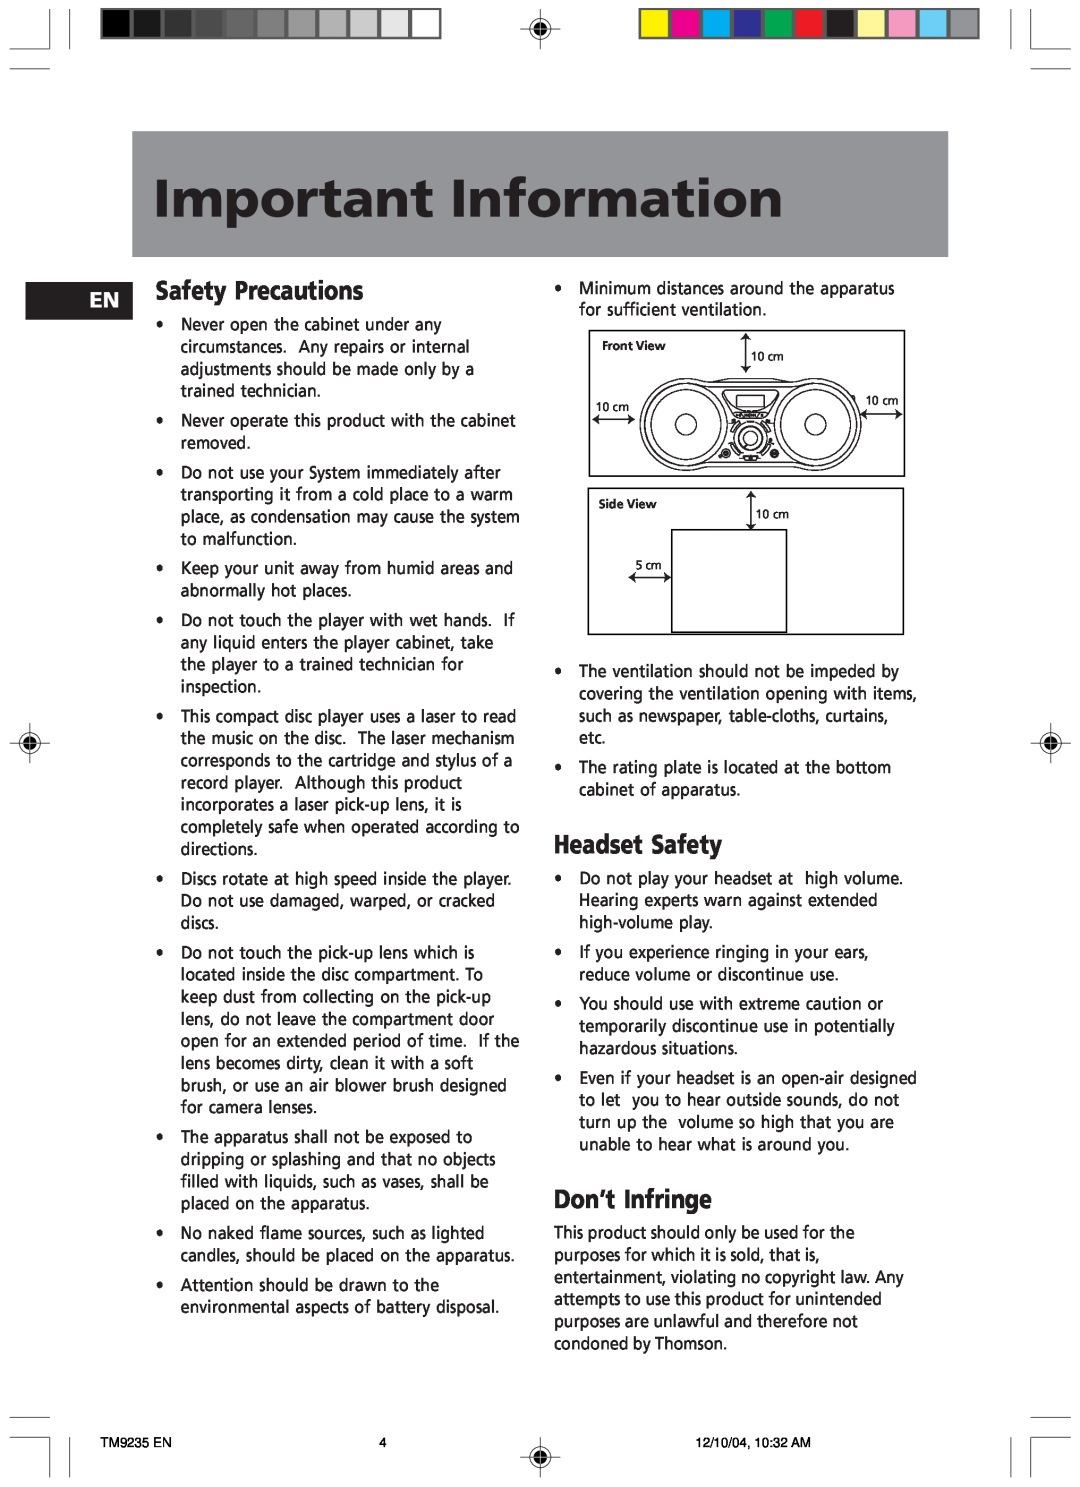 Technicolor - Thomson TM9235 EN manual Important Information, Safety Precautions, Headset Safety, Don’t Infringe 